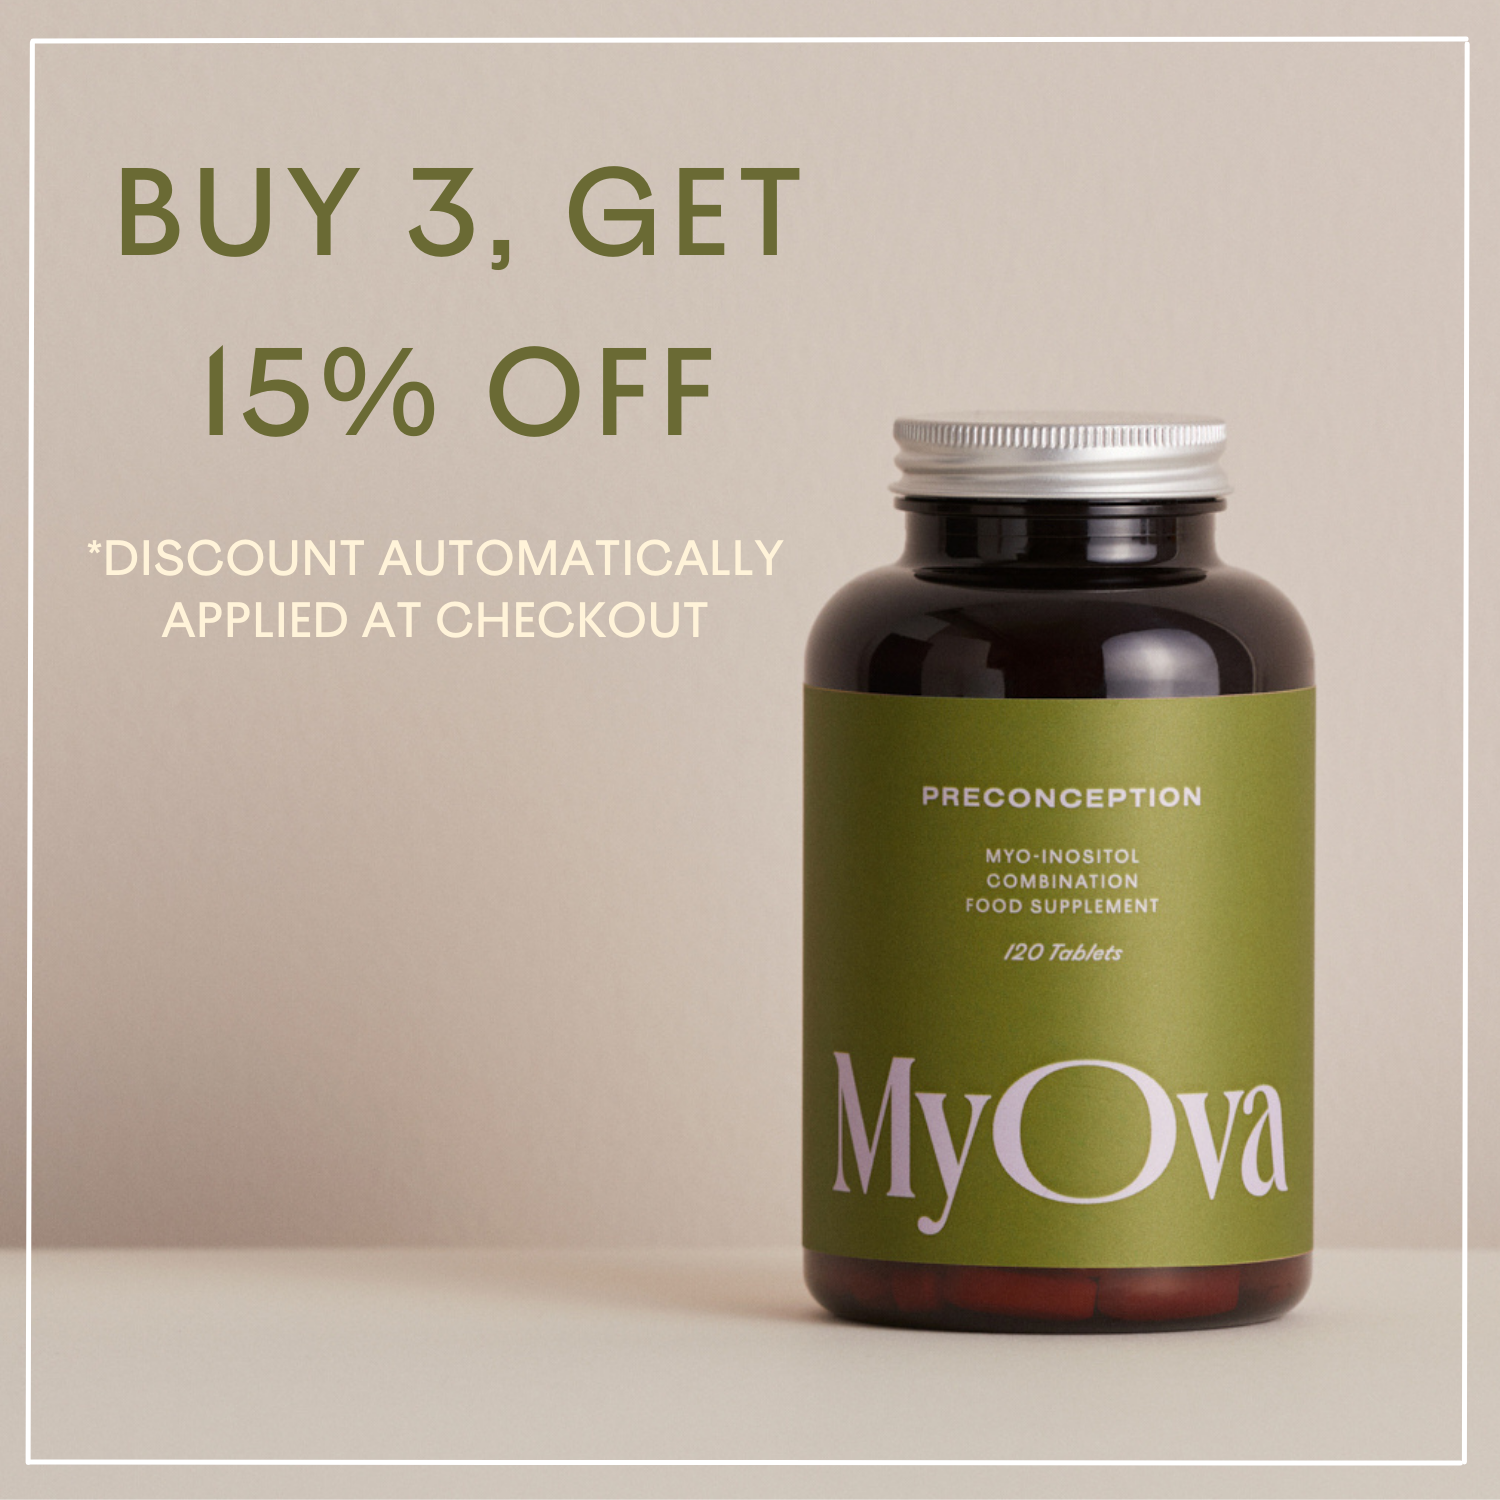 MyOva Fertility Supplement - Buy 3, Get 15% Off